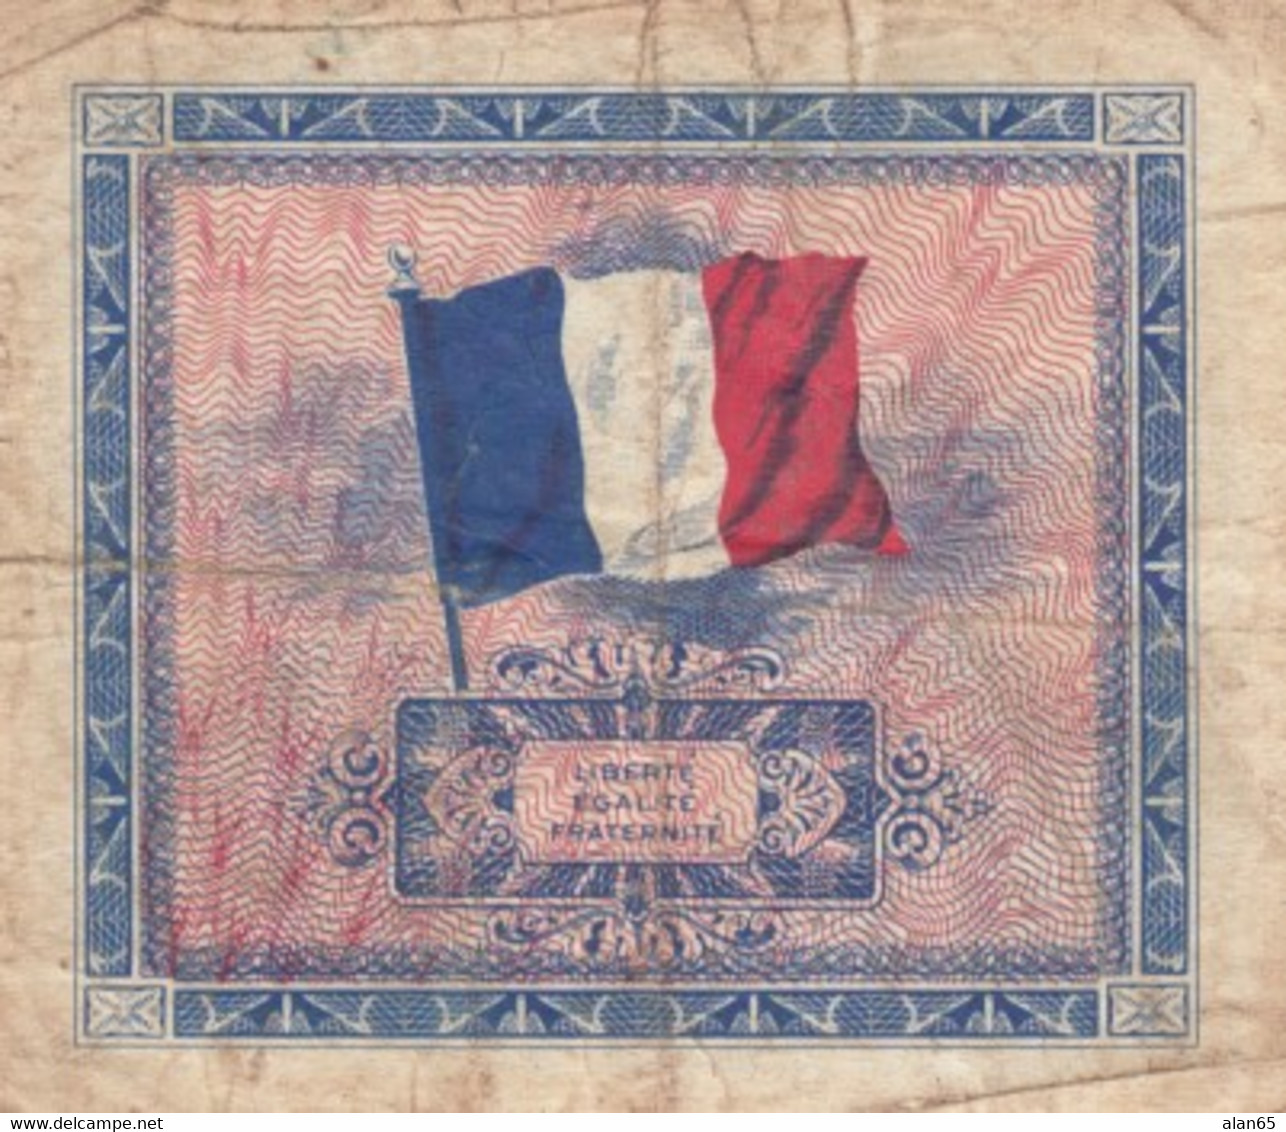 France #114a, 2 Francs 1944 Fine/Very Fine Banknote - 1944 Drapeau/France